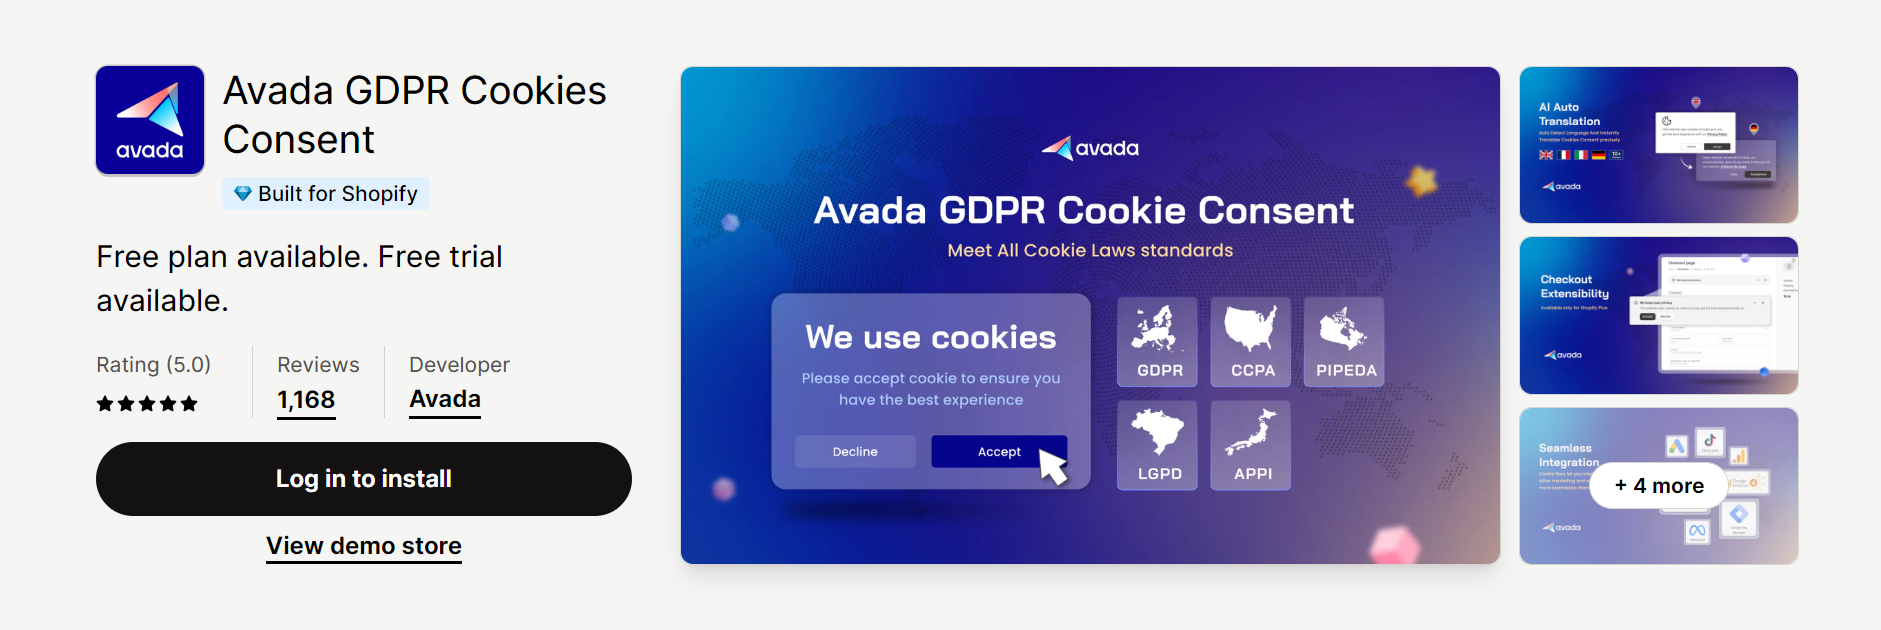 Avada GDPR Cookies Consent